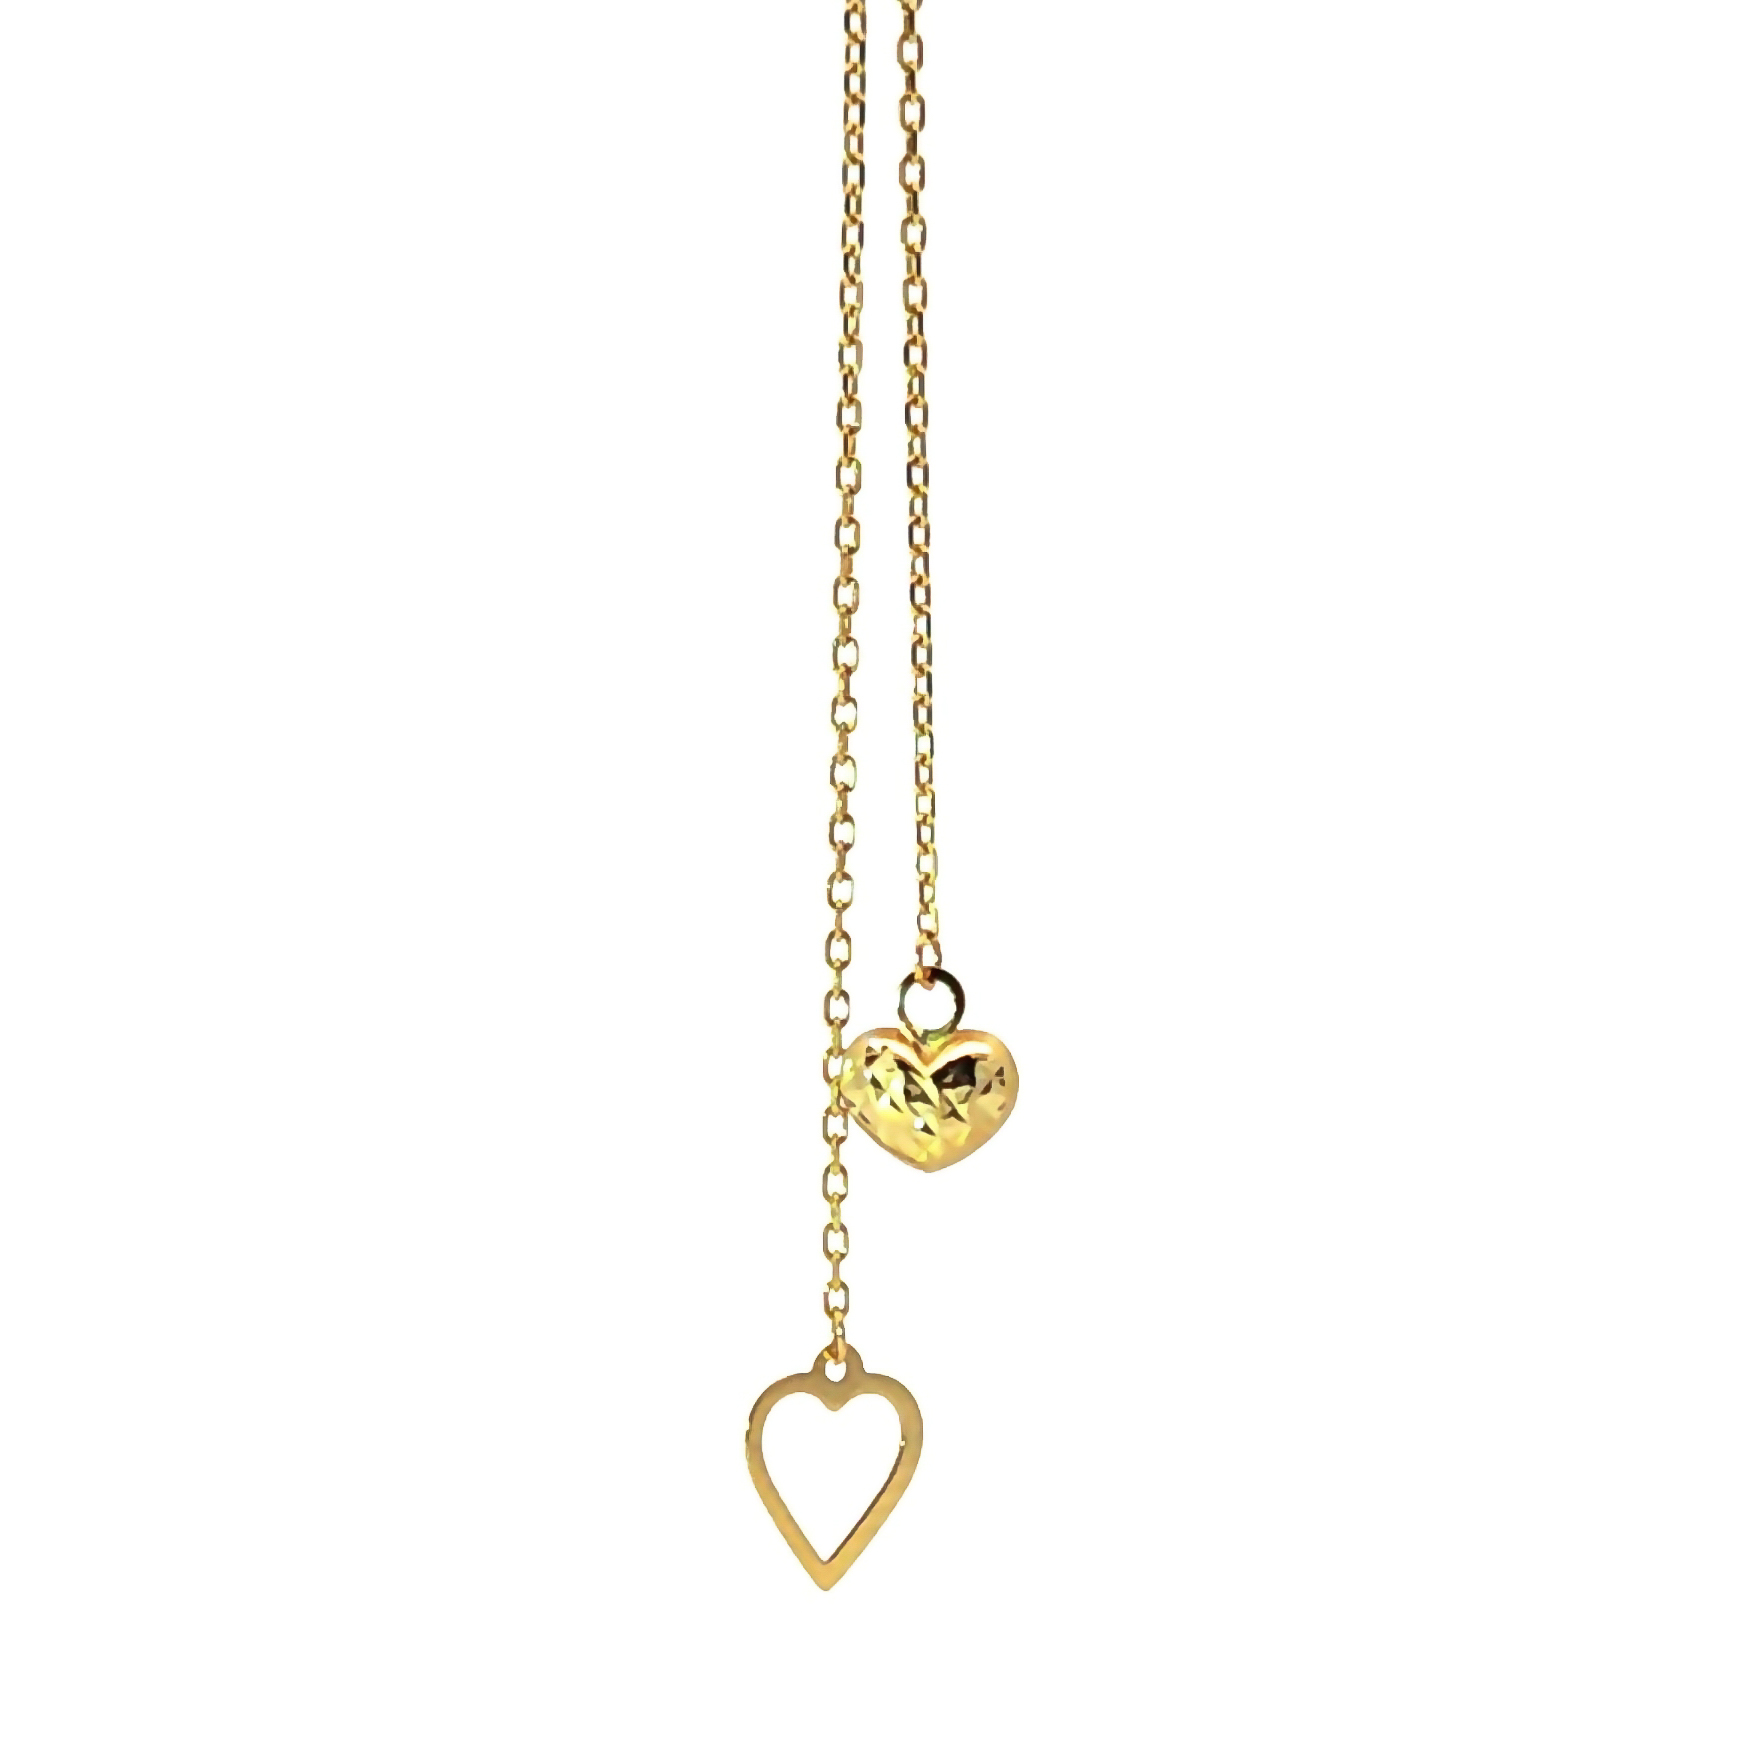 Collar de oro 18k con 2 corazones colgante, peso 2,58 grs 2